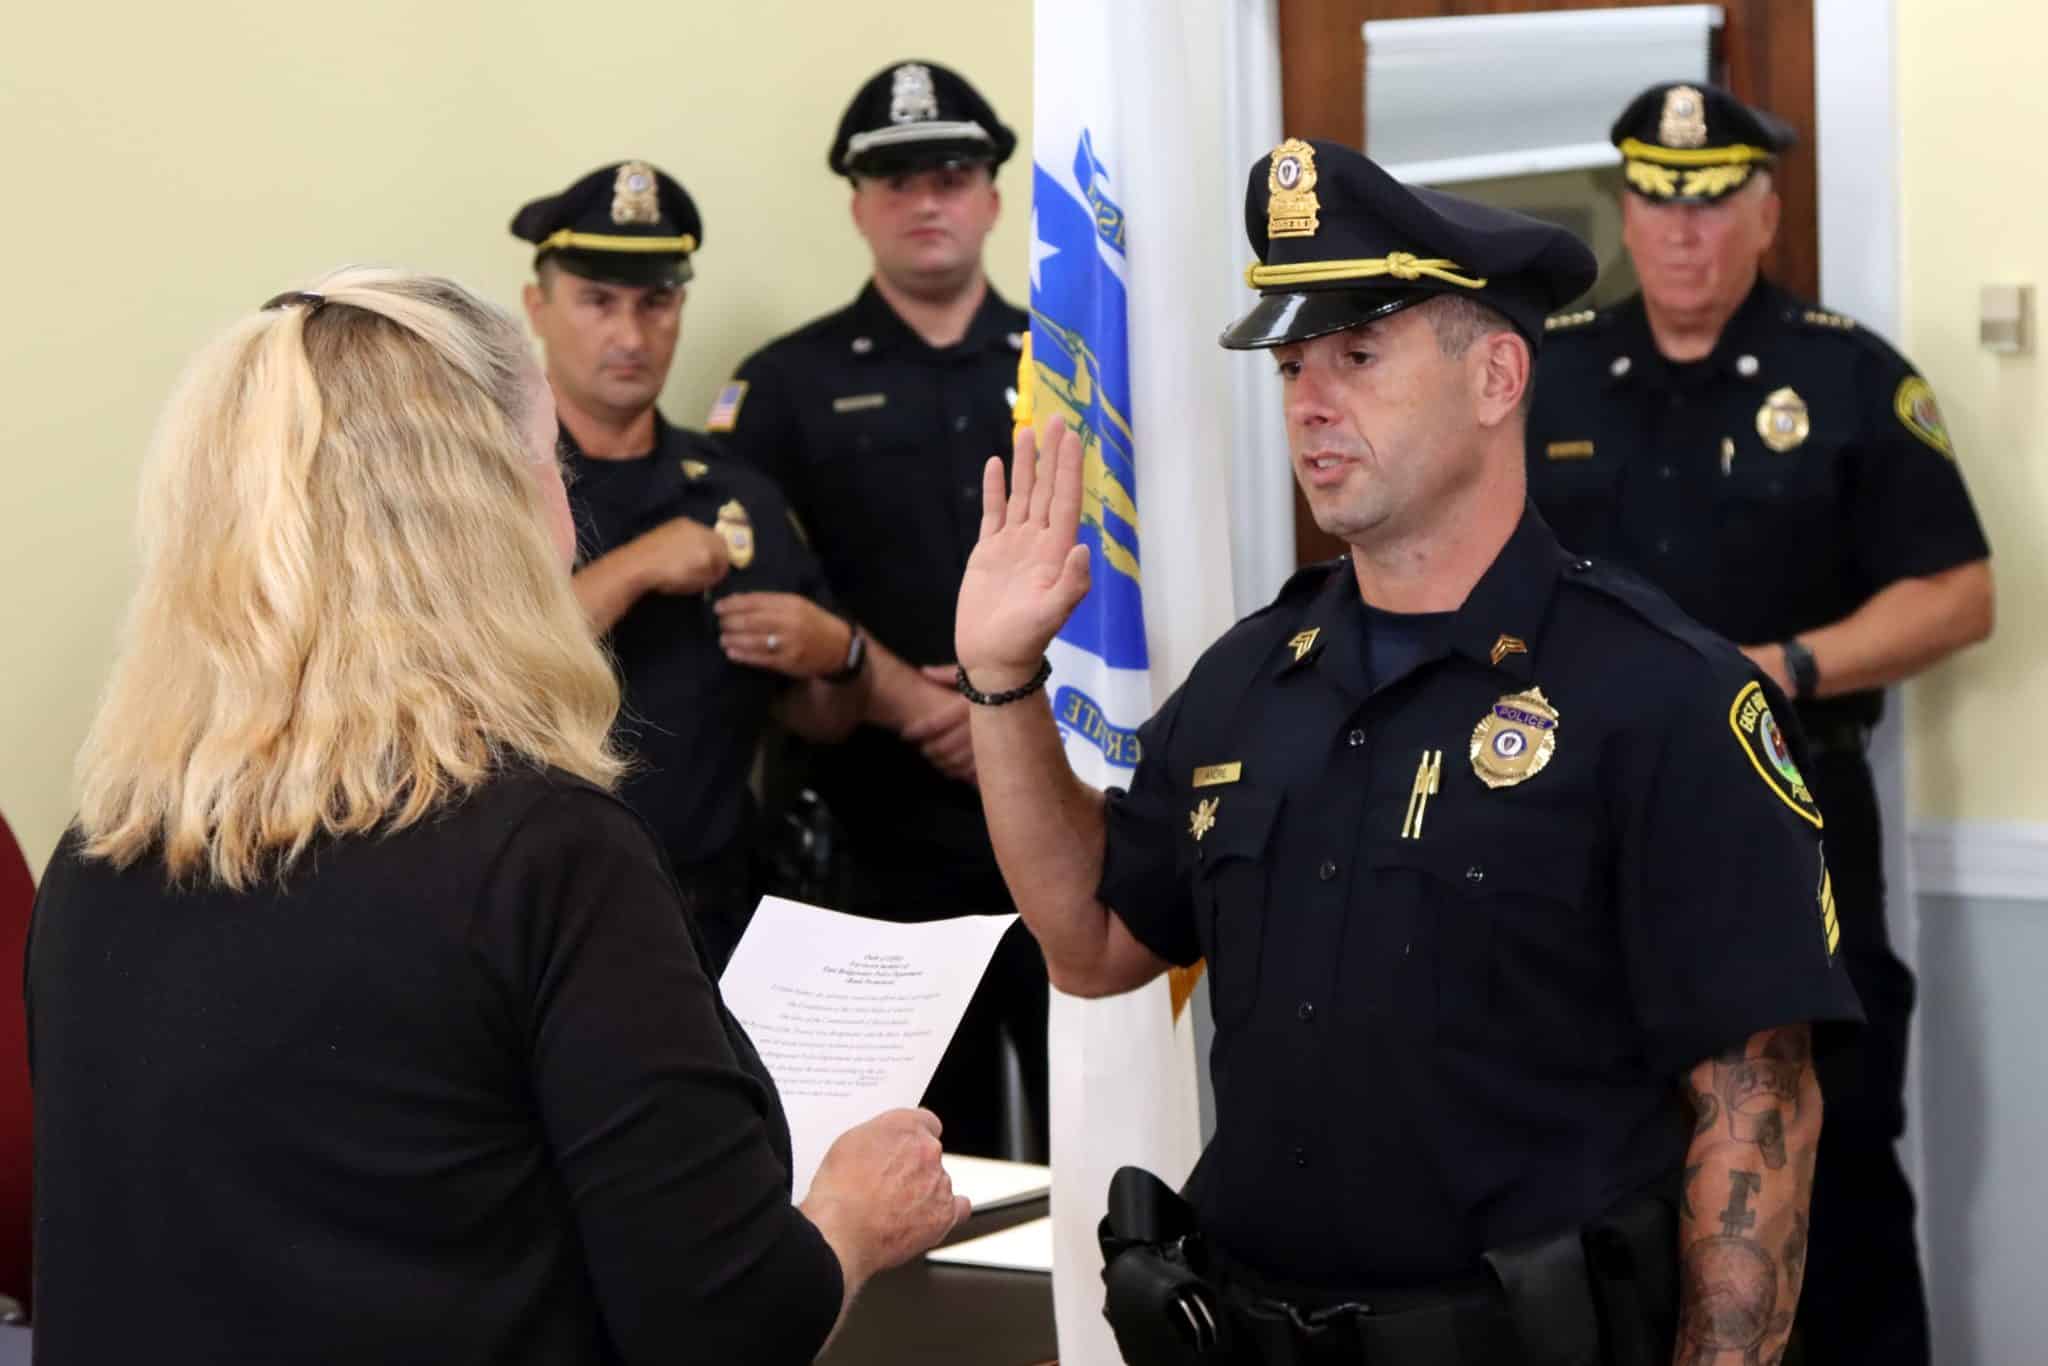 PHOTOS East Bridgewater Police Department Holds SwearingIn Ceremony